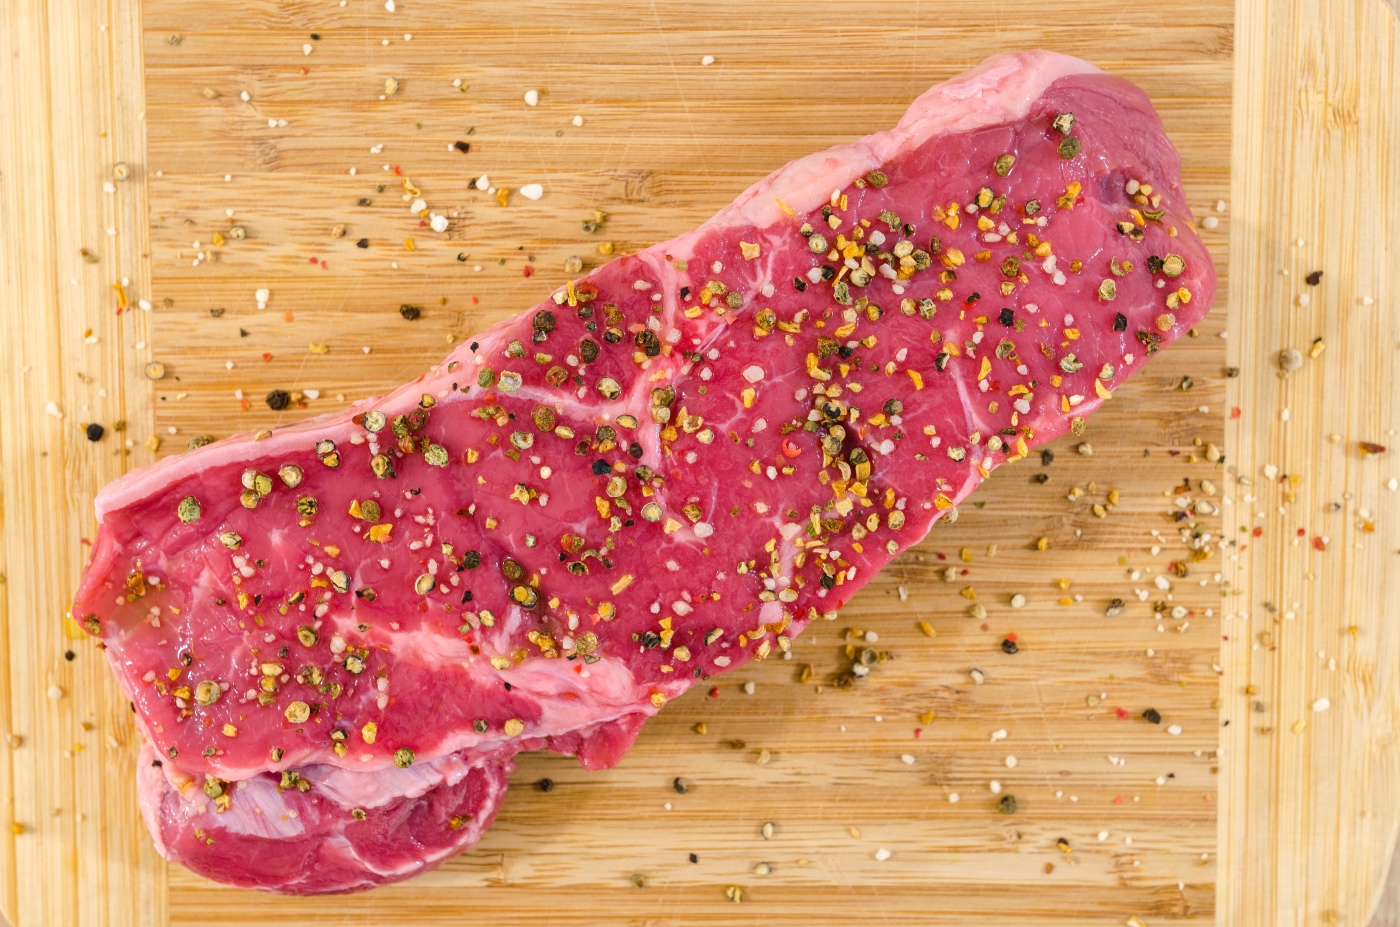 adding the marinade to the steak recipe - pop shop america food blog